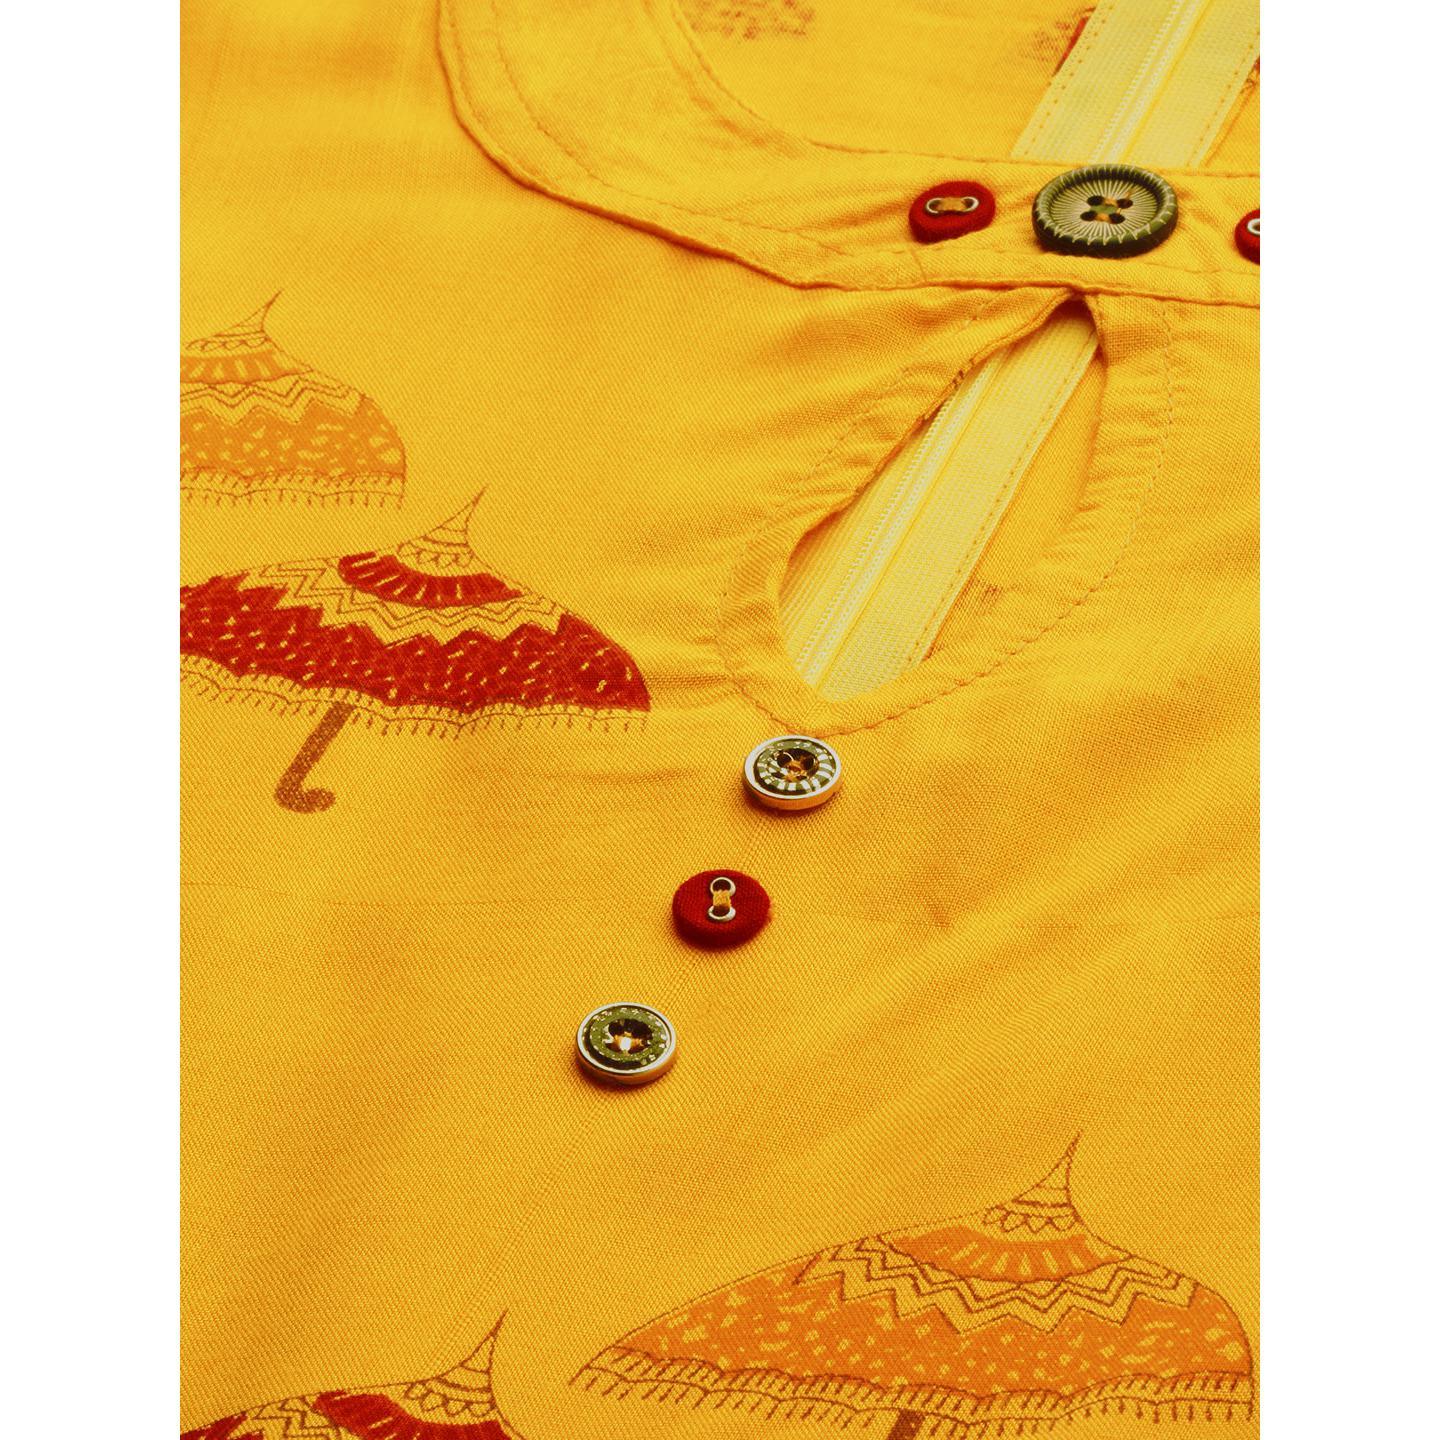 Blissta Women's Mustard Coloured Rayon Printed Anarkali Kurti - Peachmode